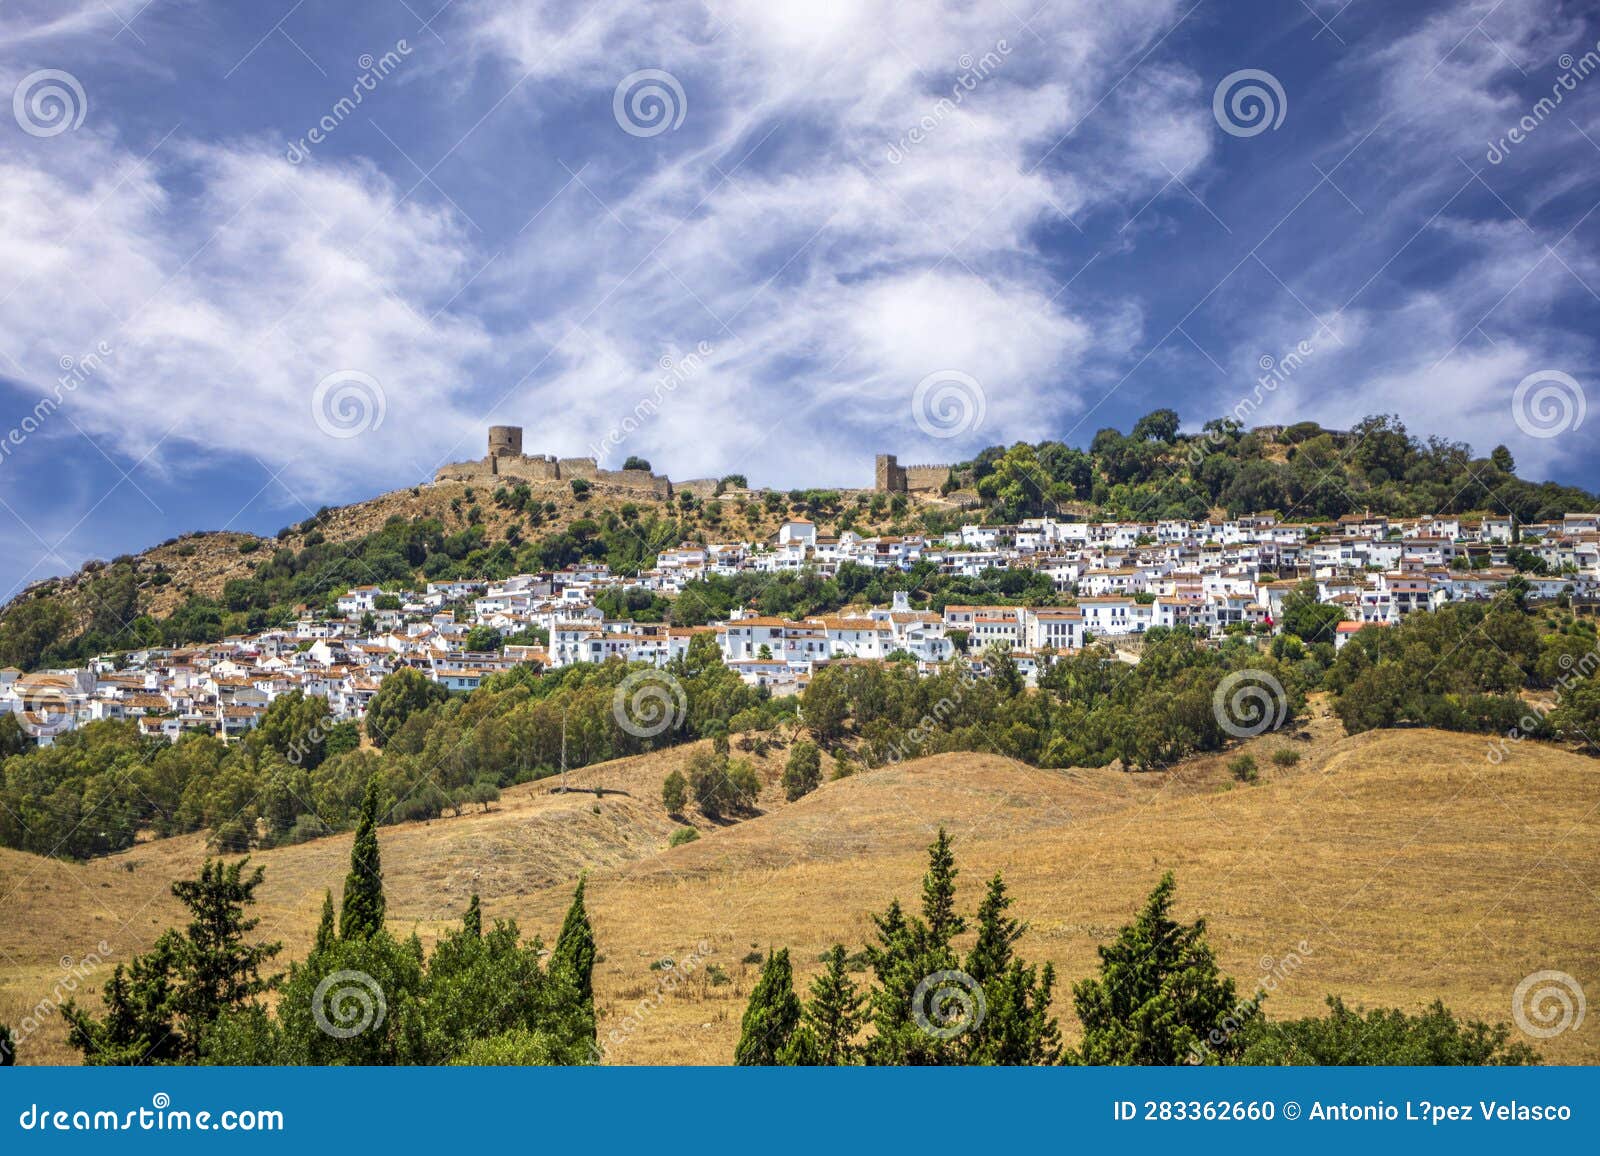 panoramic view of the typical white village of cÃ¡diz jimena de la frontera